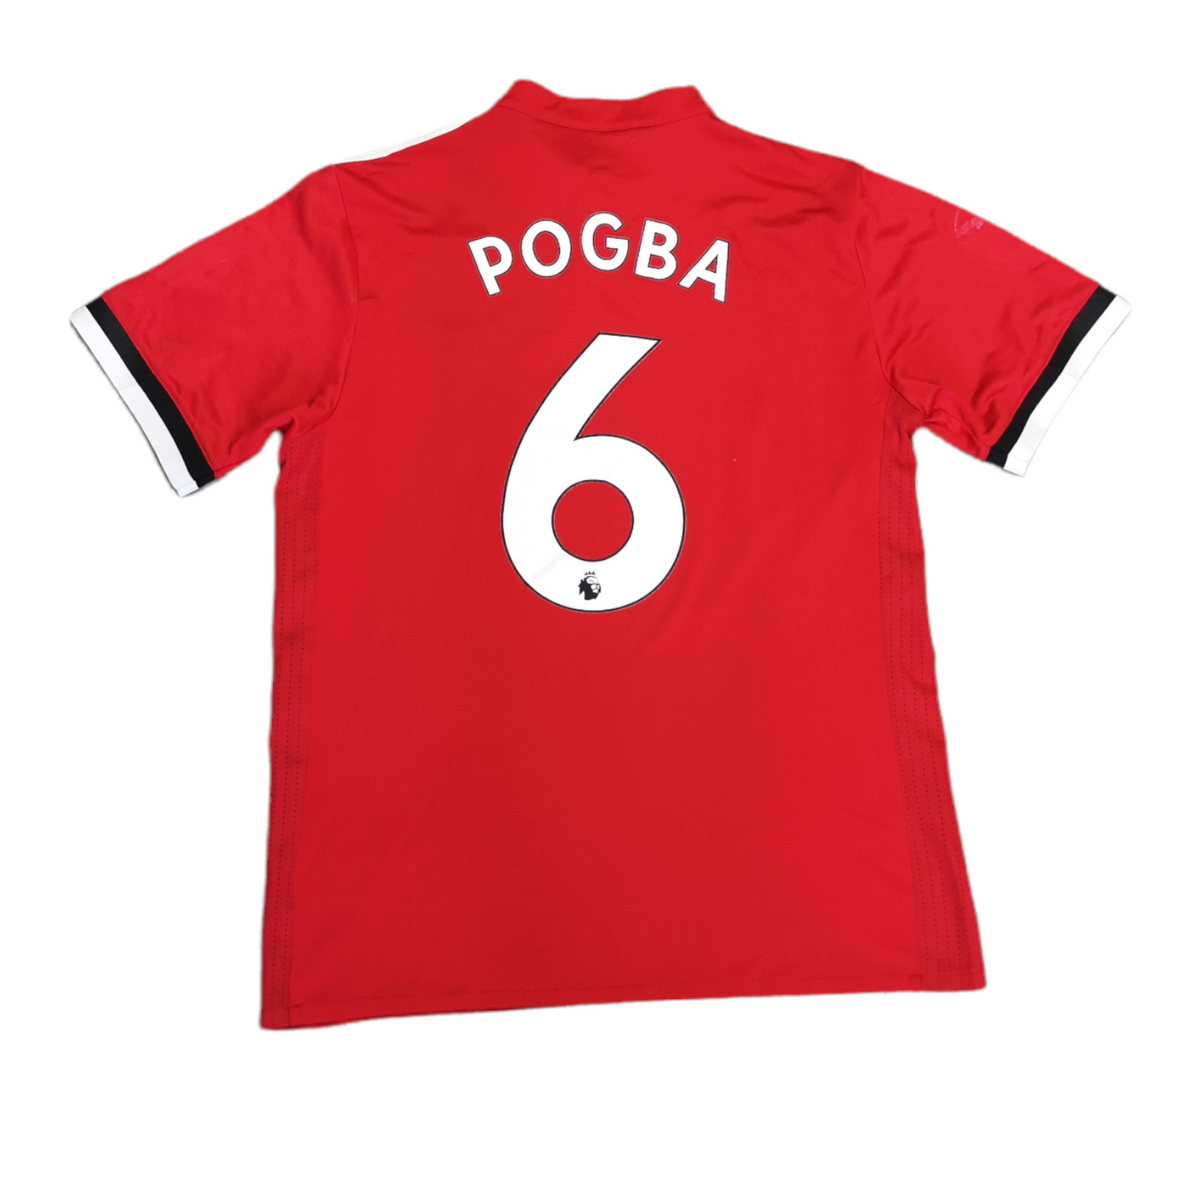 2017/2018 Adidas Manchester United Pogba 6 Home Shirt - Size Medium